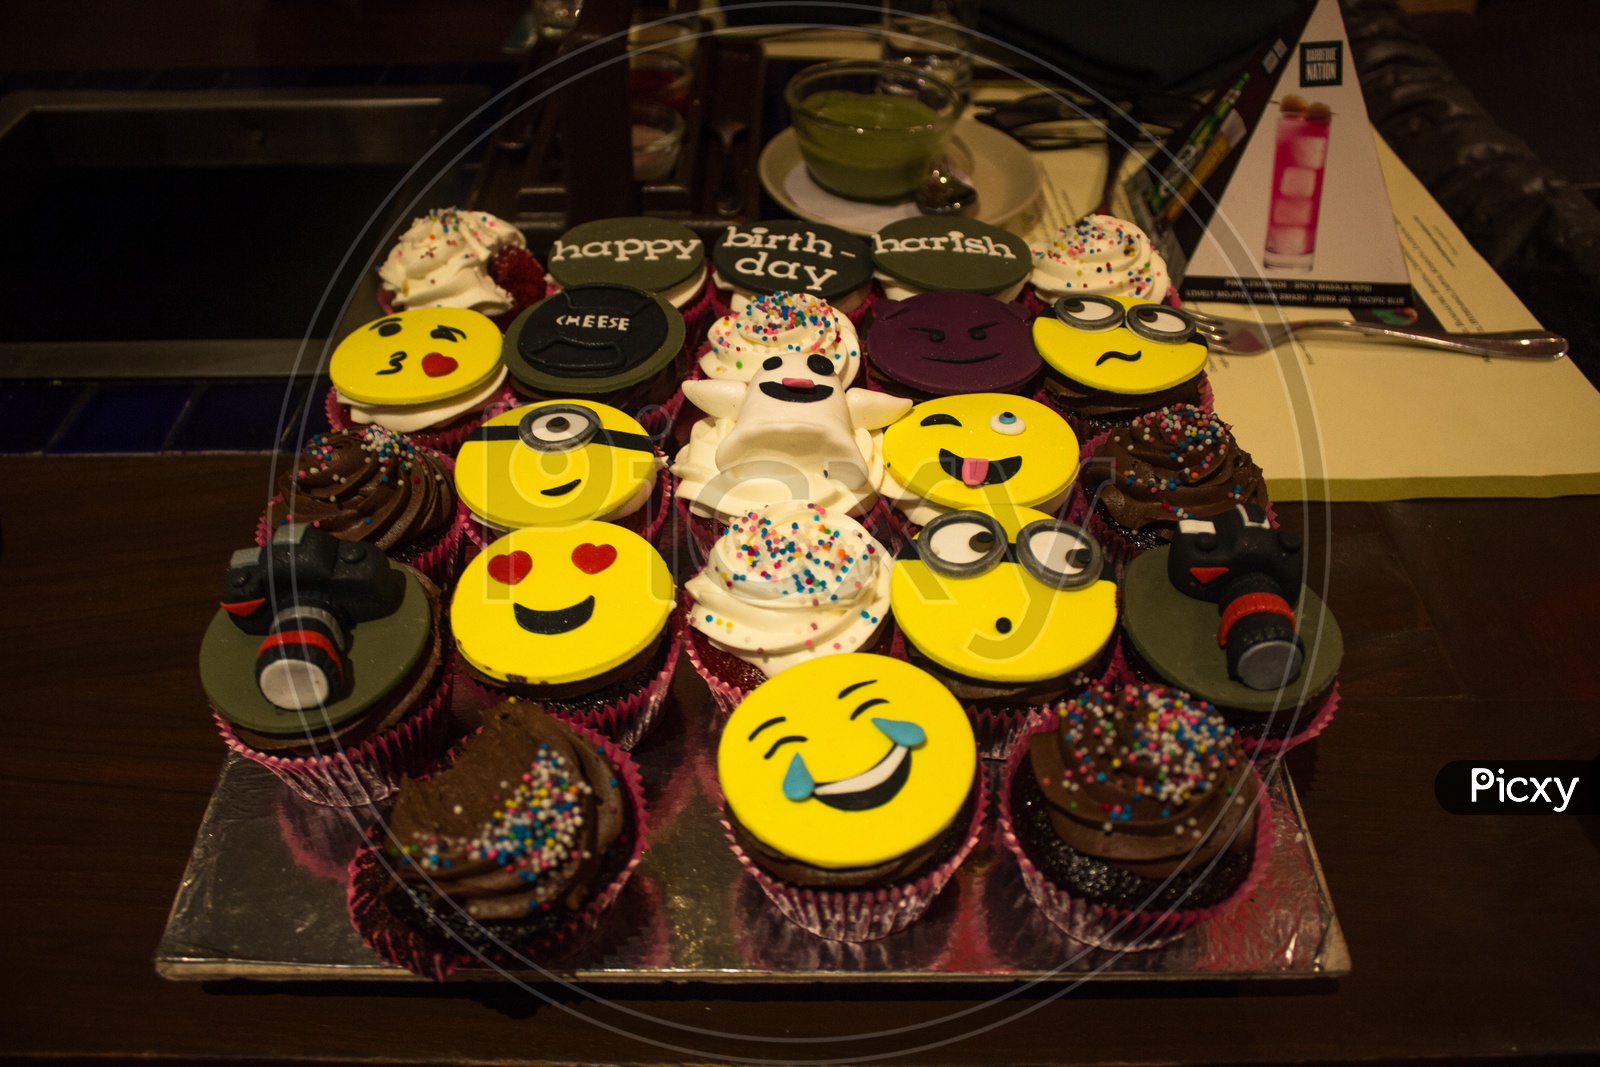 Smiley Cakes